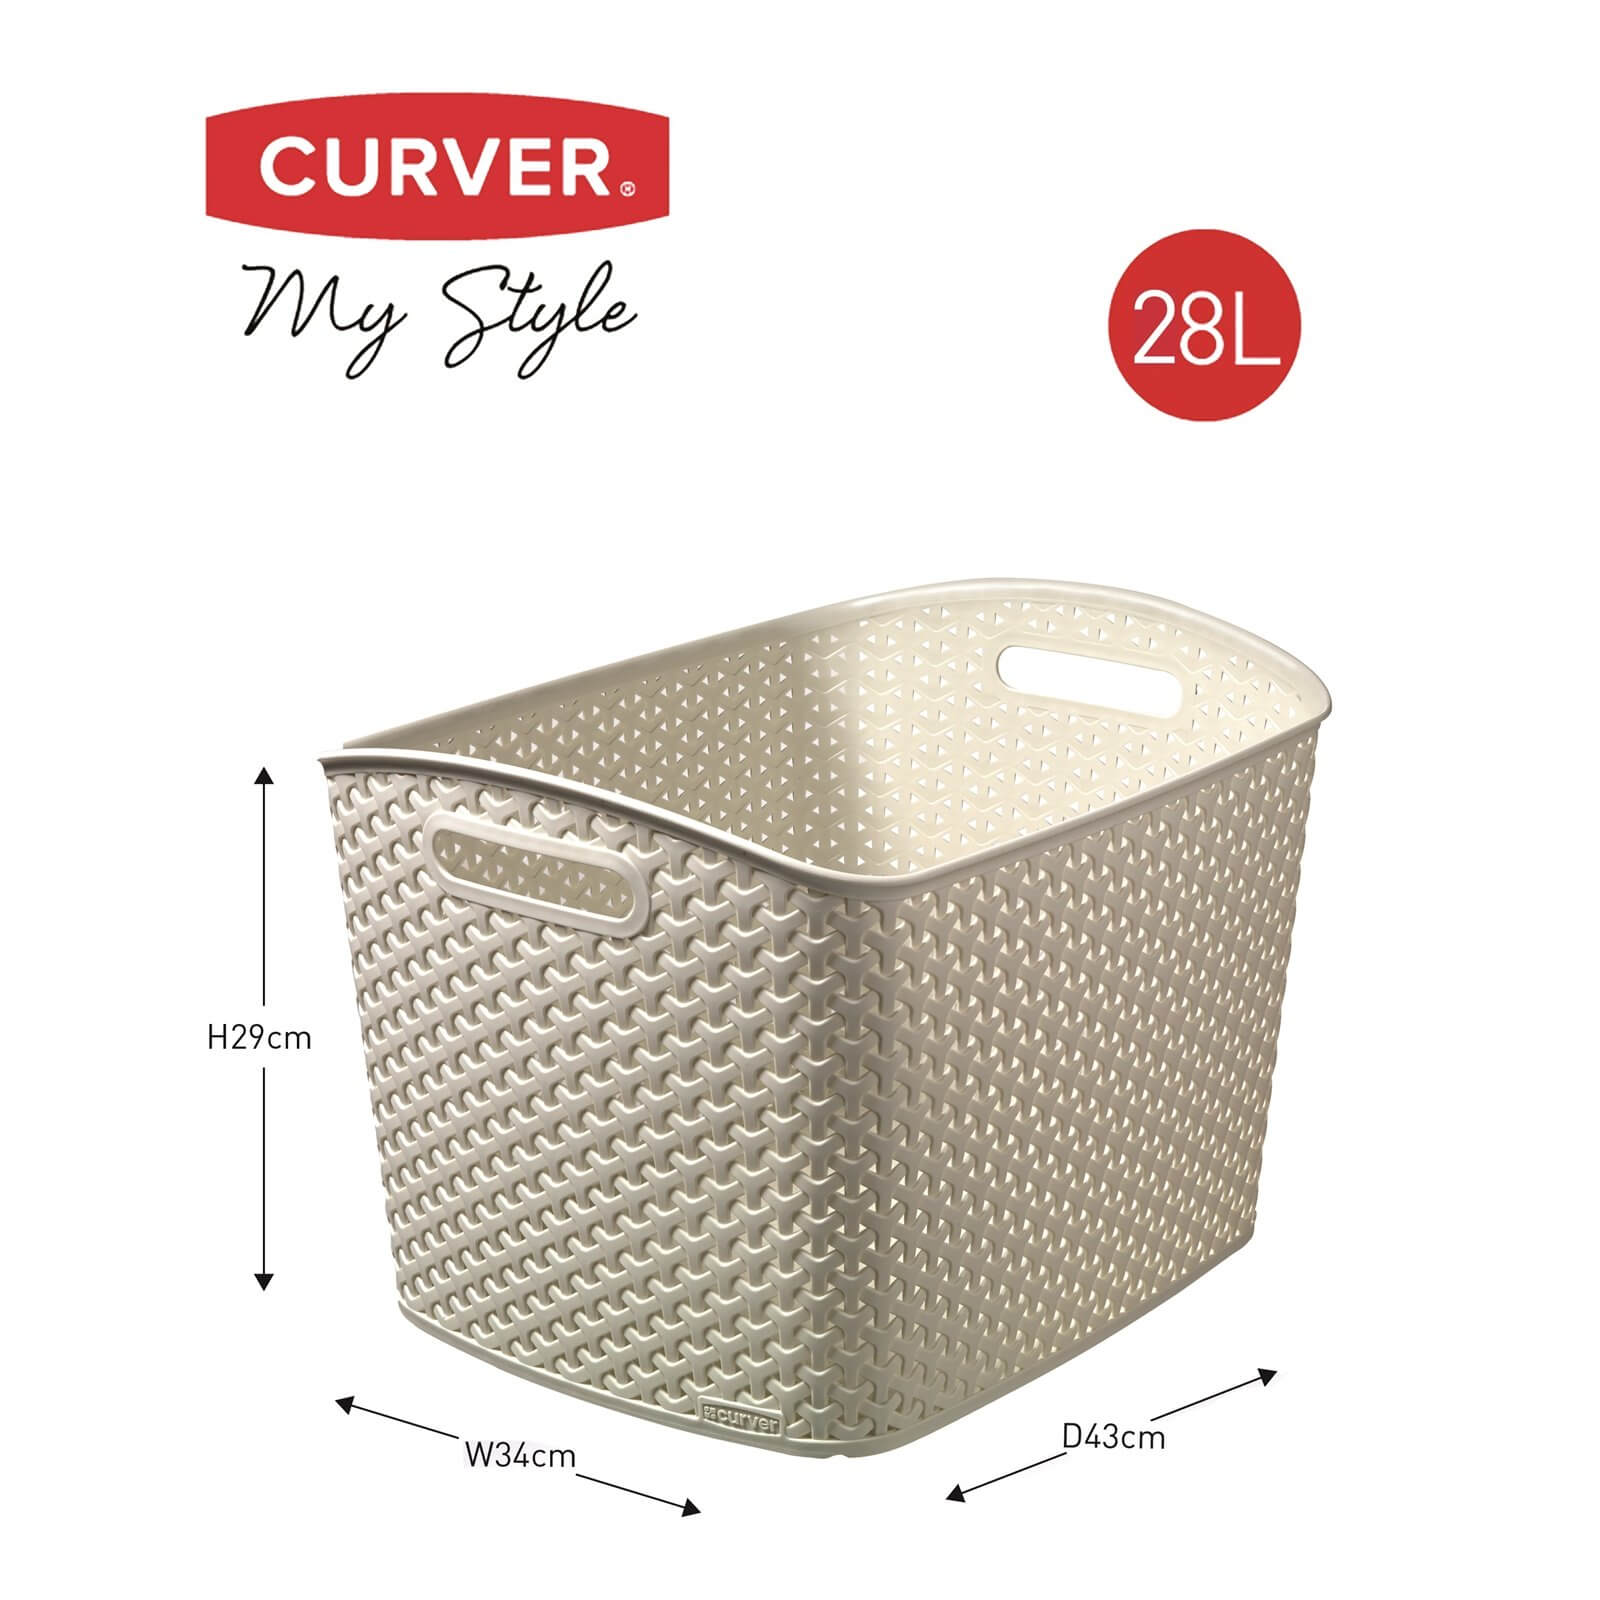 Curver My Style Extra Large Rectangular Plastic Storage Basket - Vintage White 28L